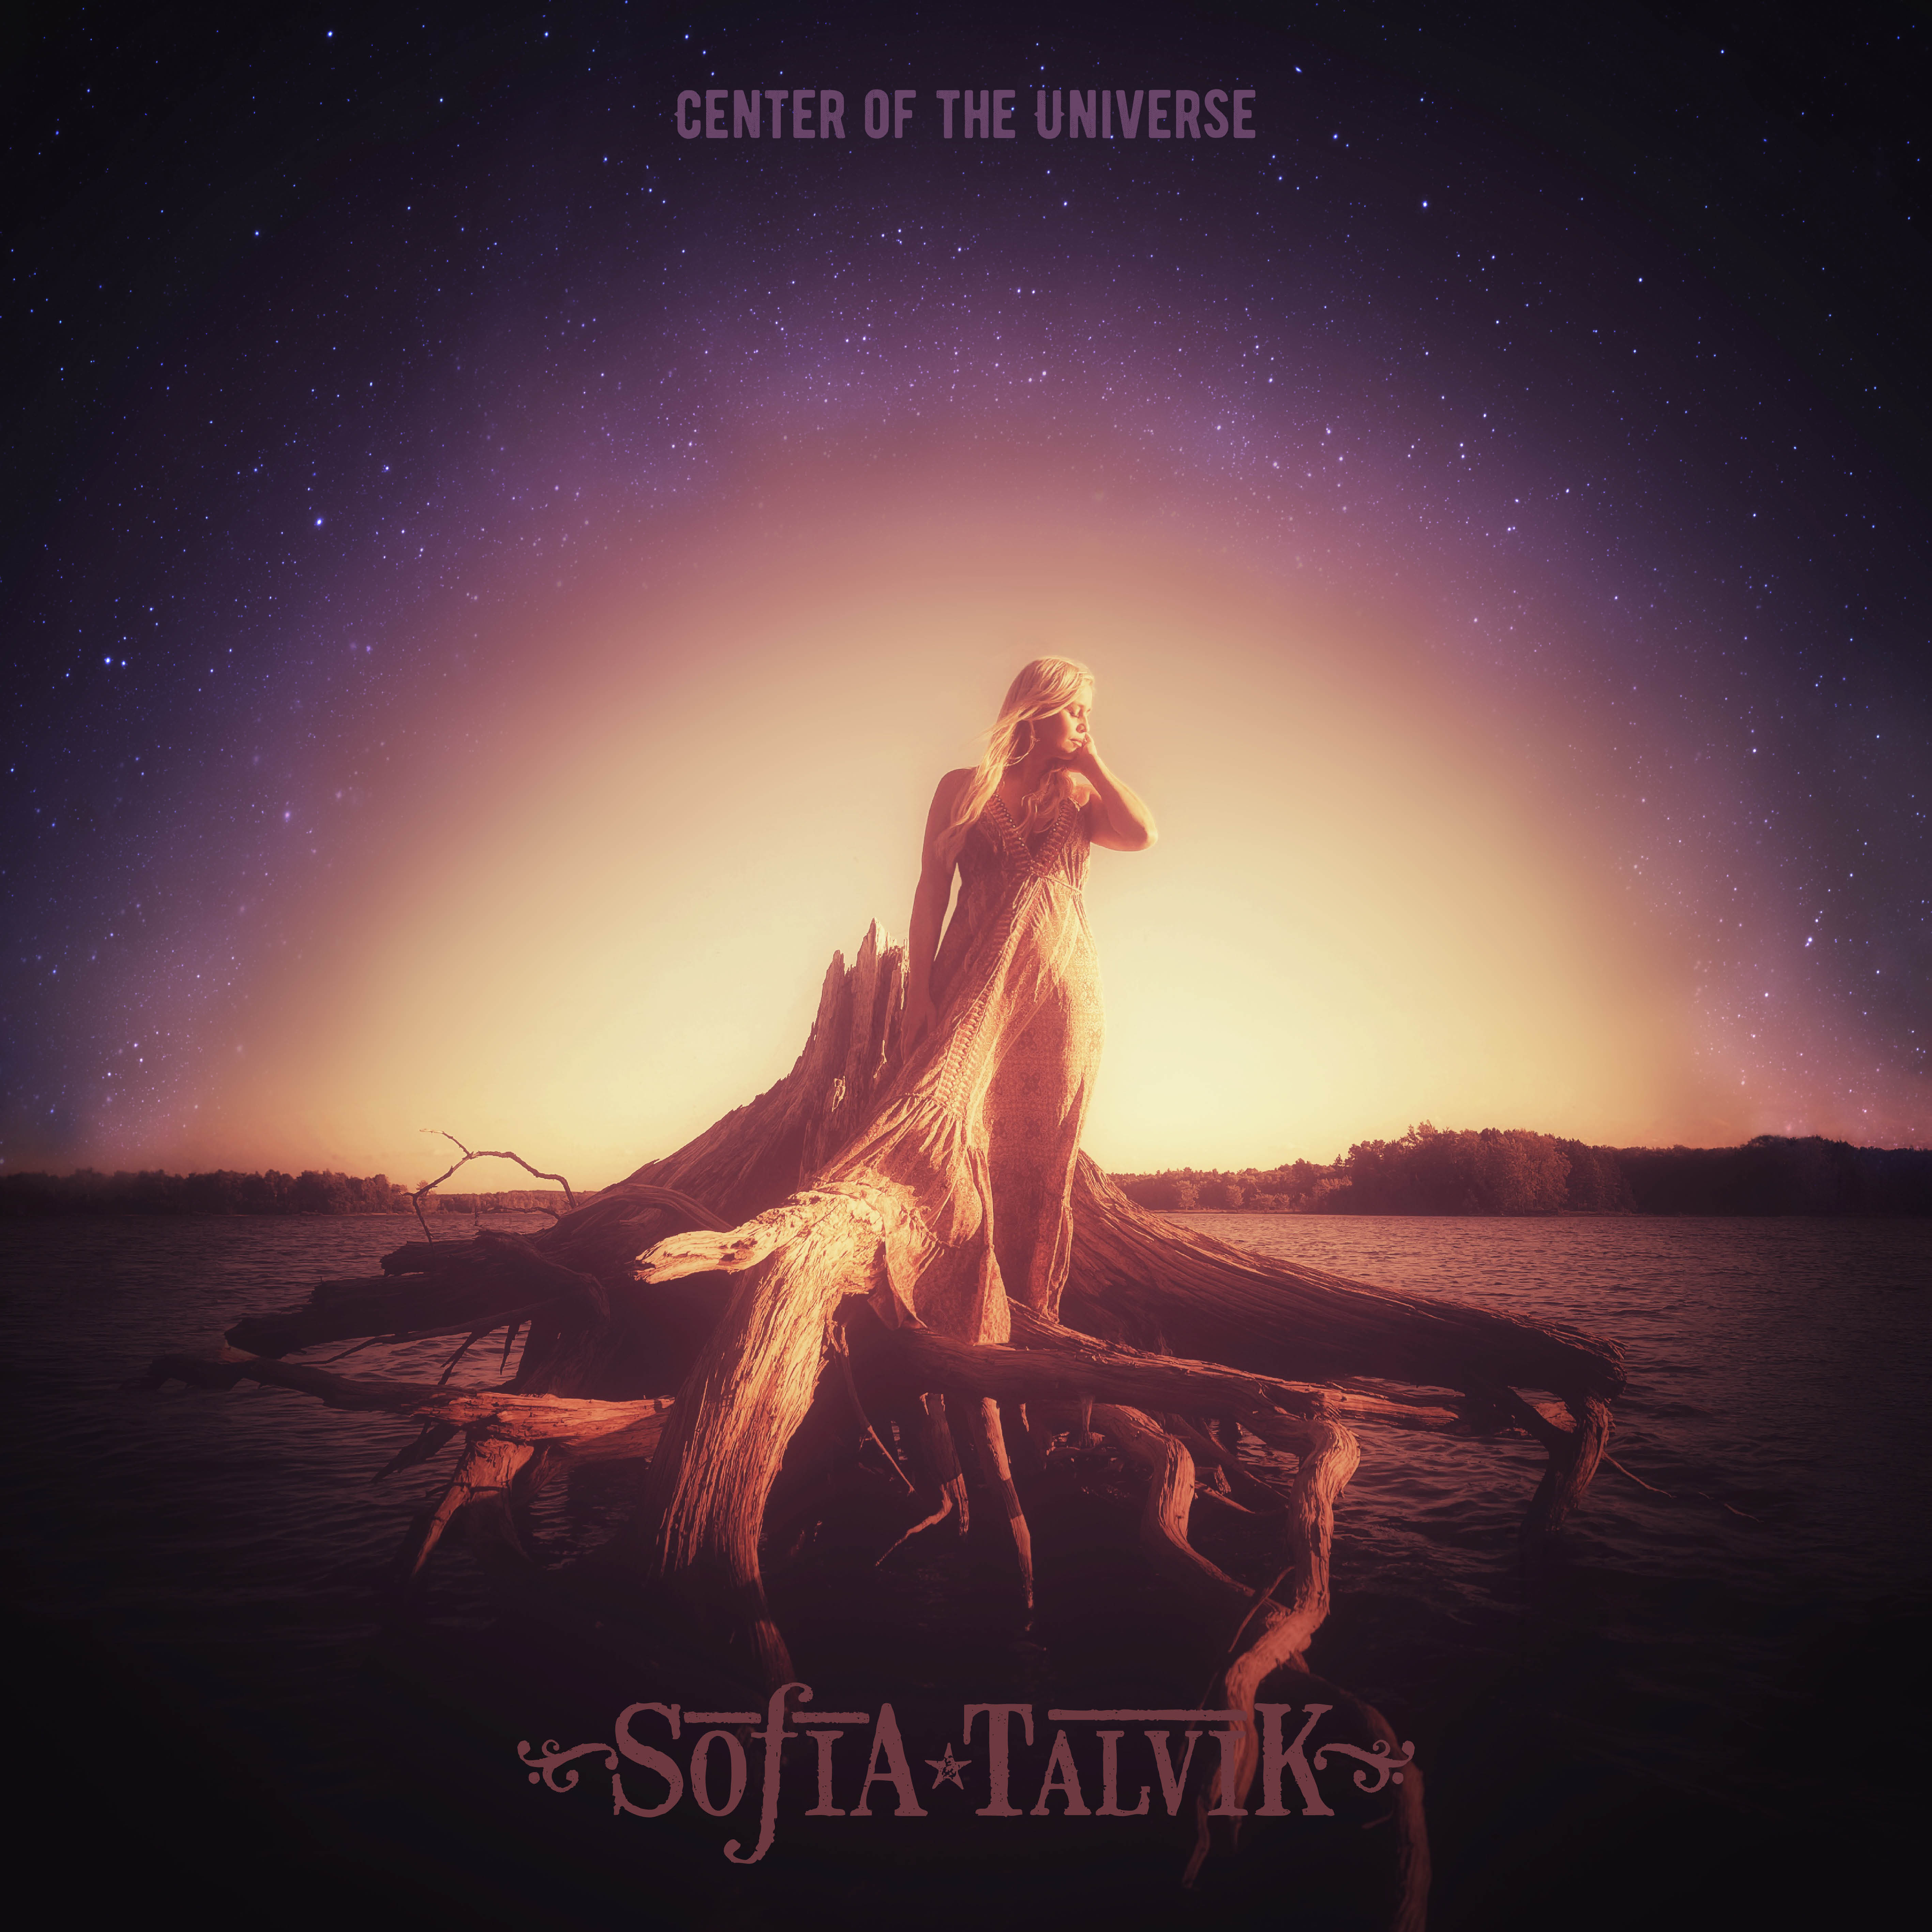 Sofia Talvik's 9th Album "Center of the Universe" – A Poignant Exploration of Life's Earnest Moments